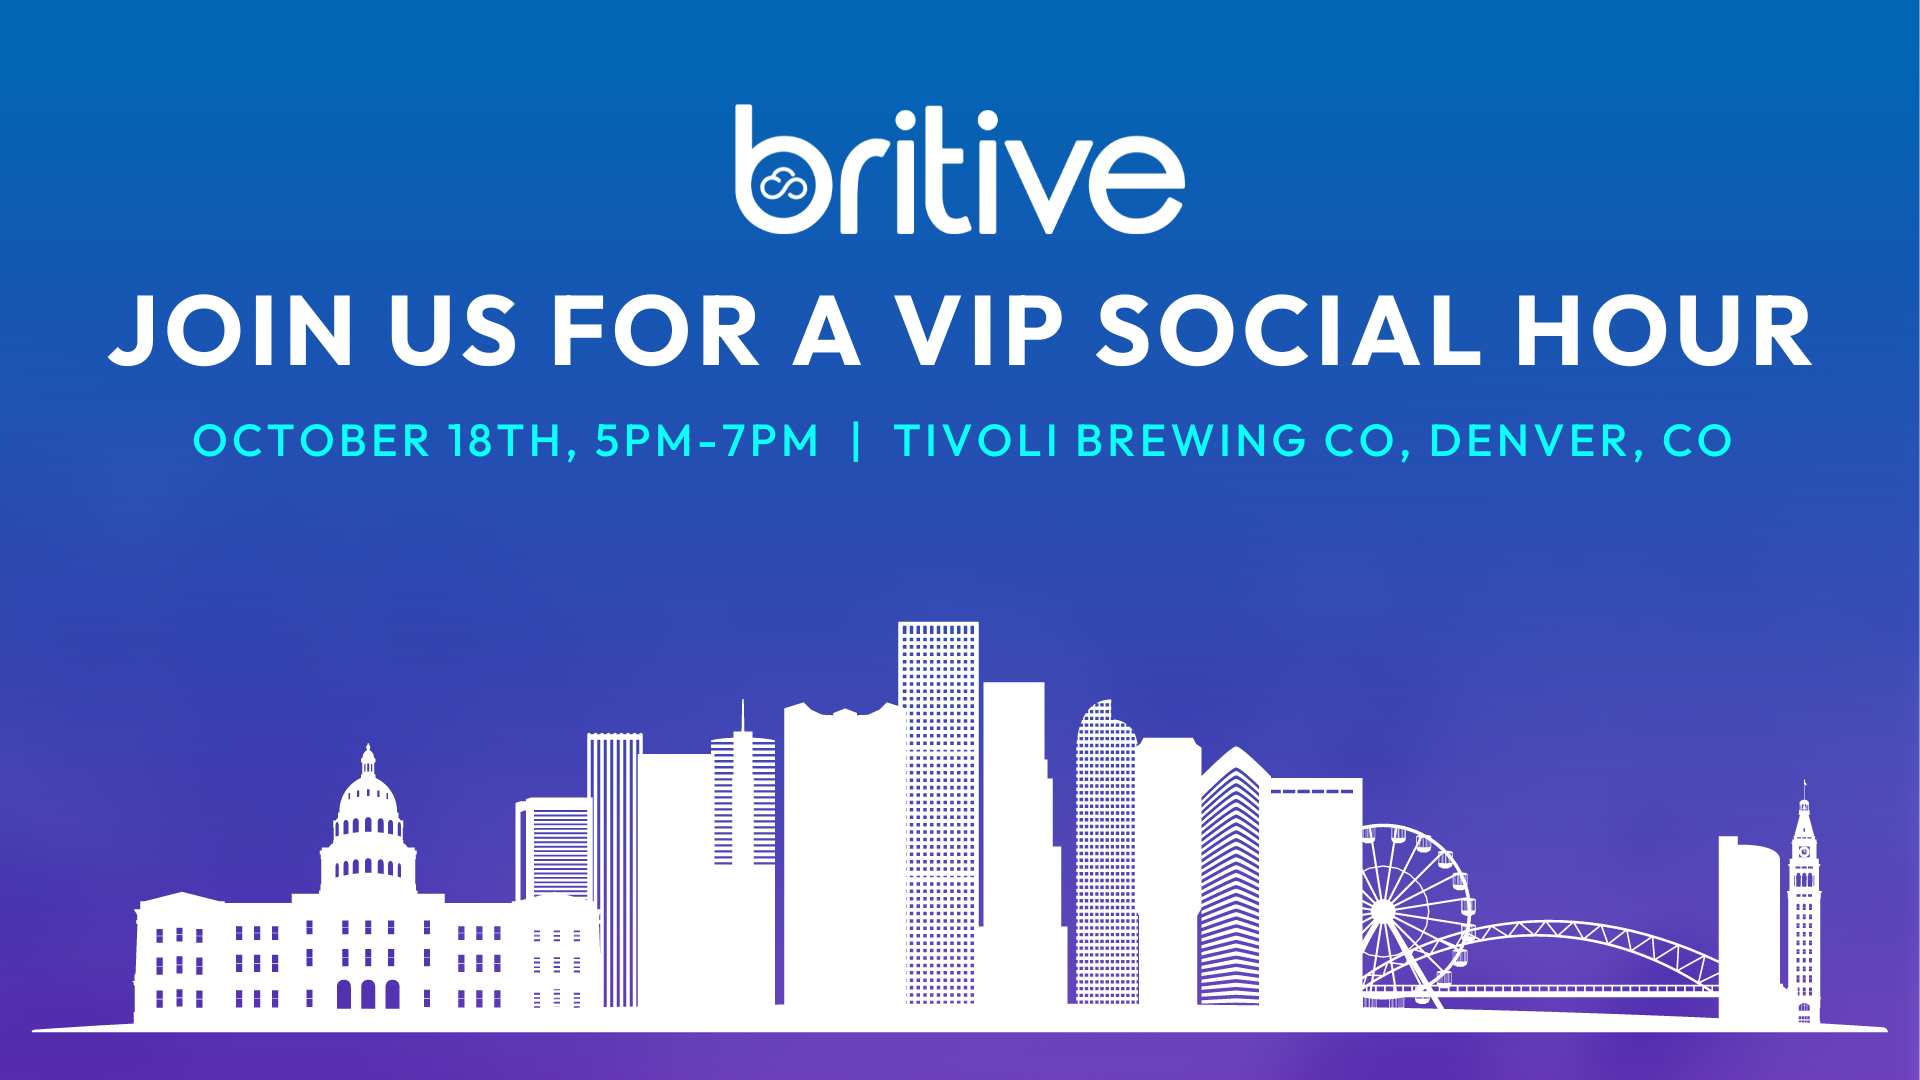 Britive Social Hour at Tivoli Brewing Co.